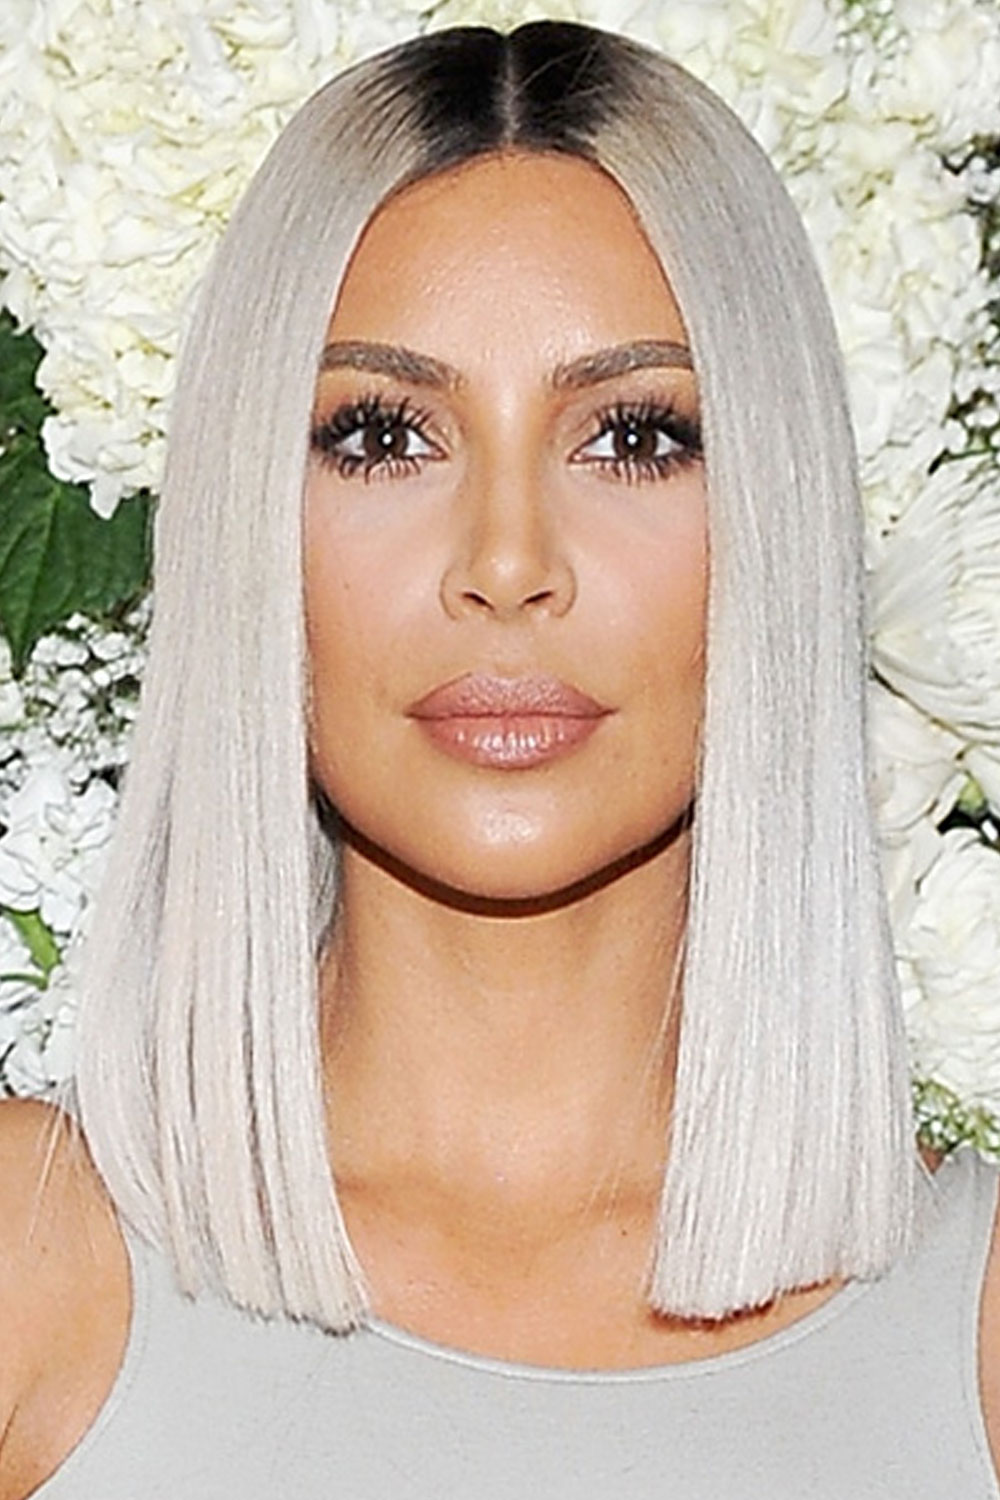 26 Kim Kardashian Hairstyles And Hair Cuts - Celebrities